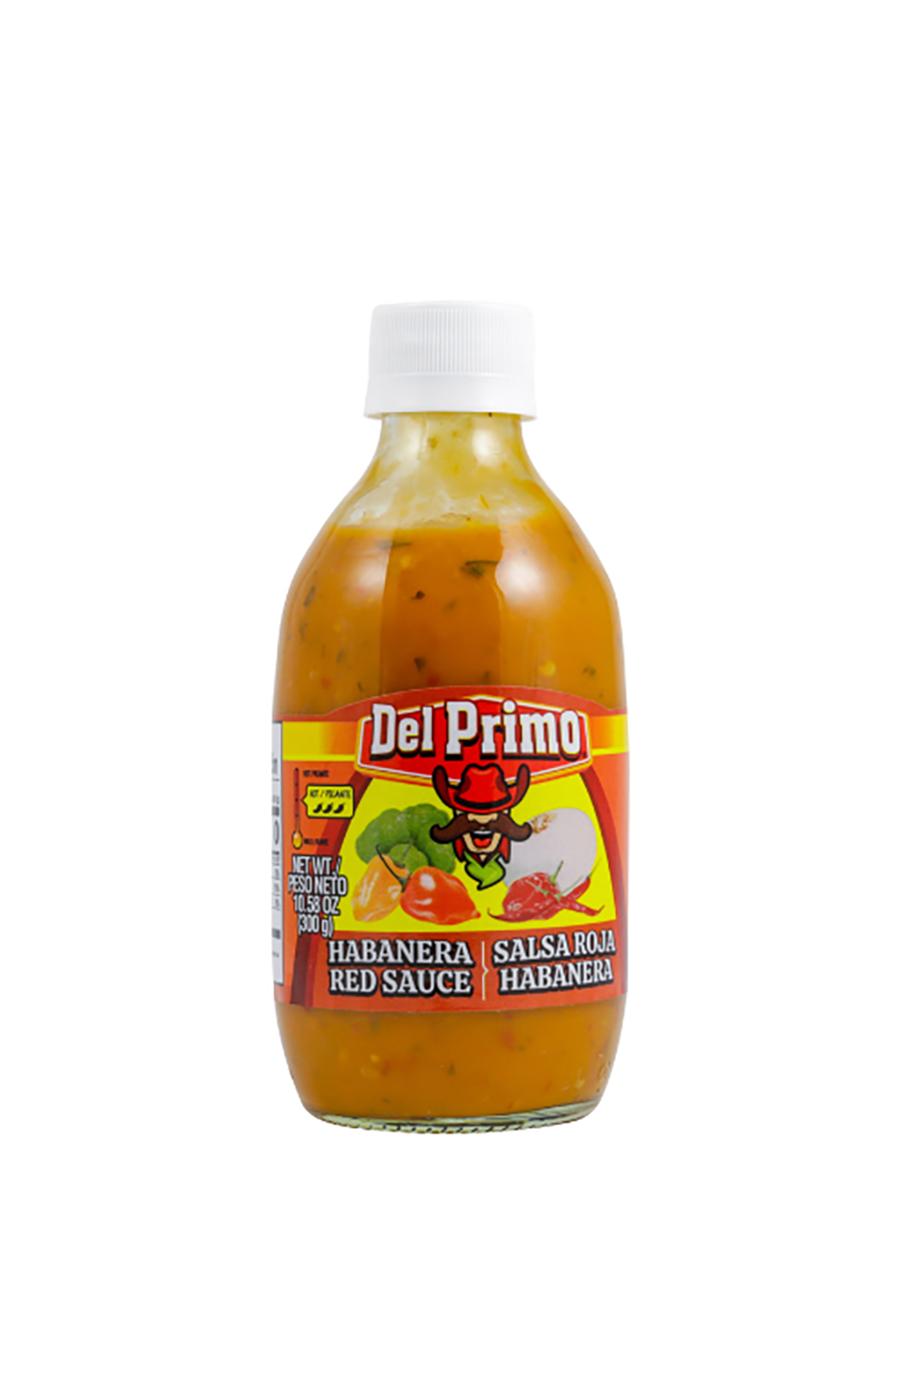 Del Primo Salsa Habanera Roja Red Sauce; image 1 of 3